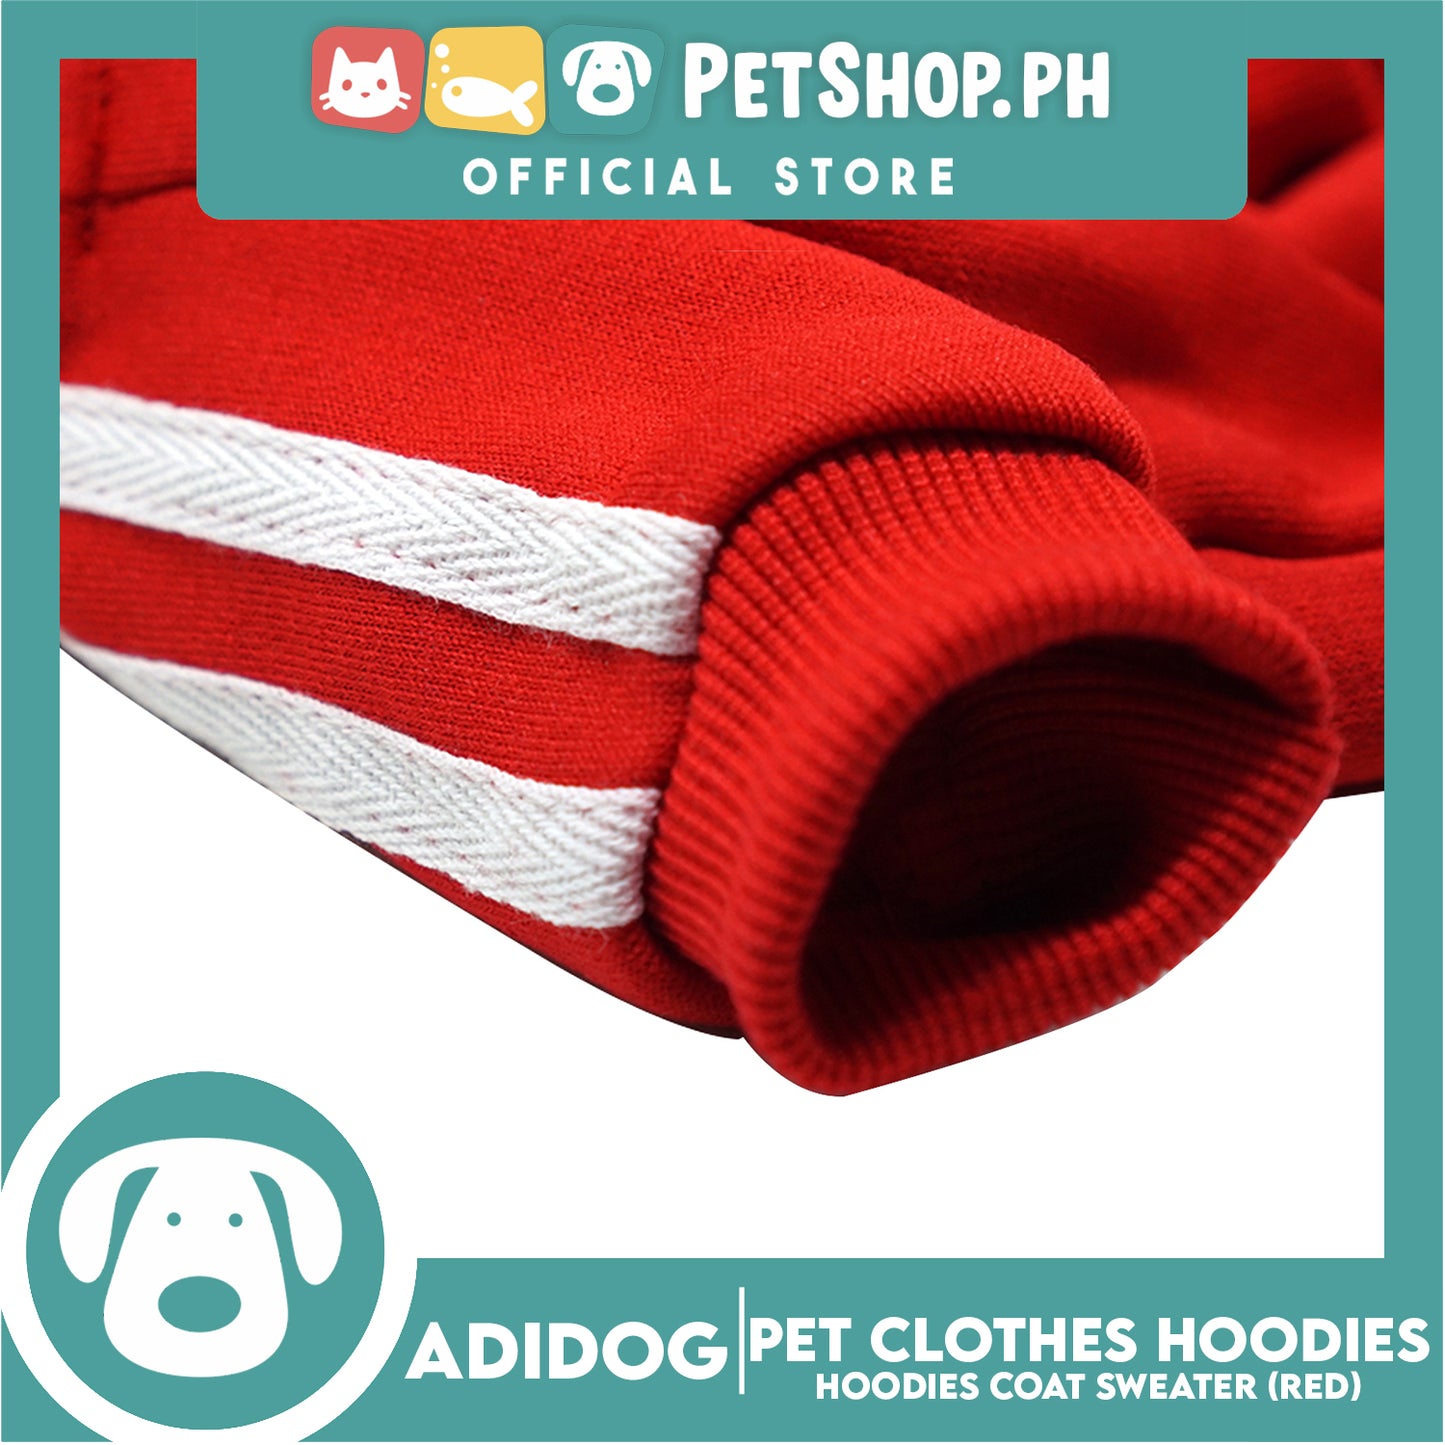 Adidog Pet Clothes Hoodies, Cute Warm Winter Hoodies Coat Sweater (Red) Large